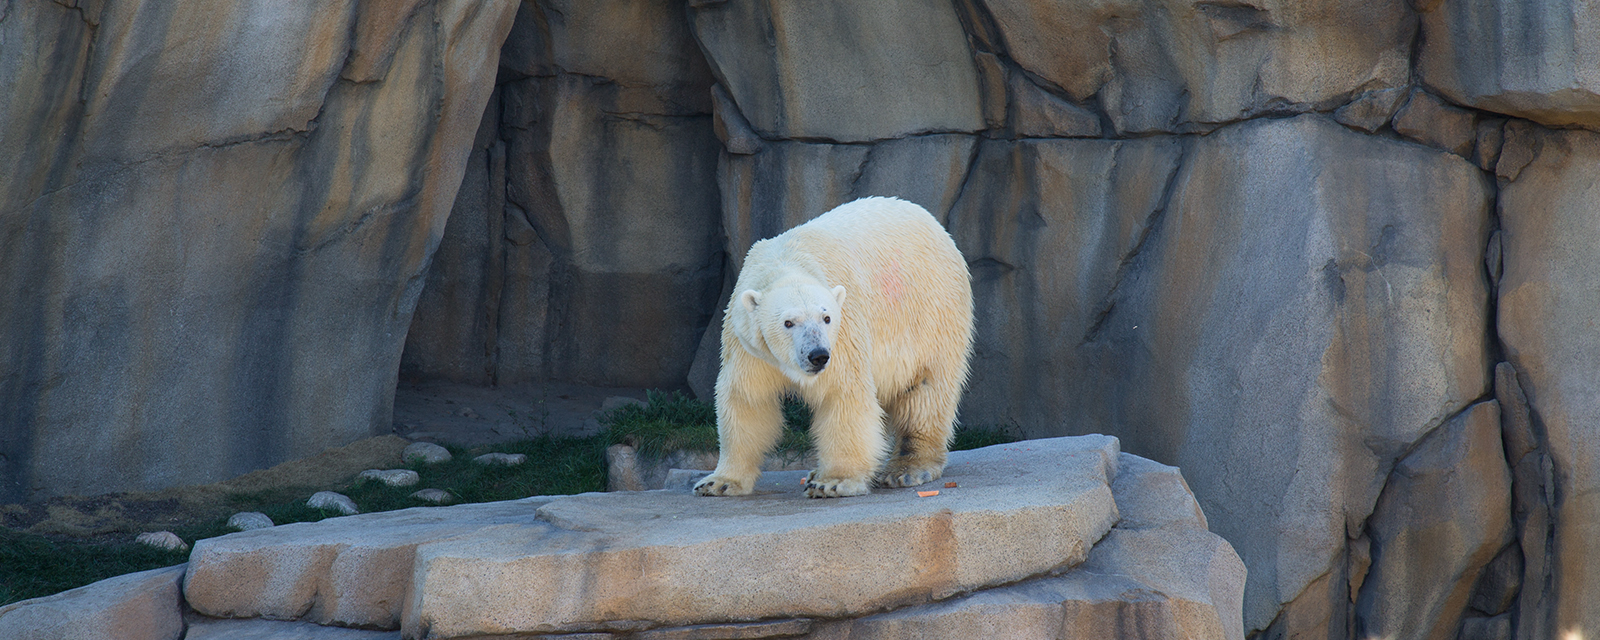 Polar bear standing on a rock in exhibit